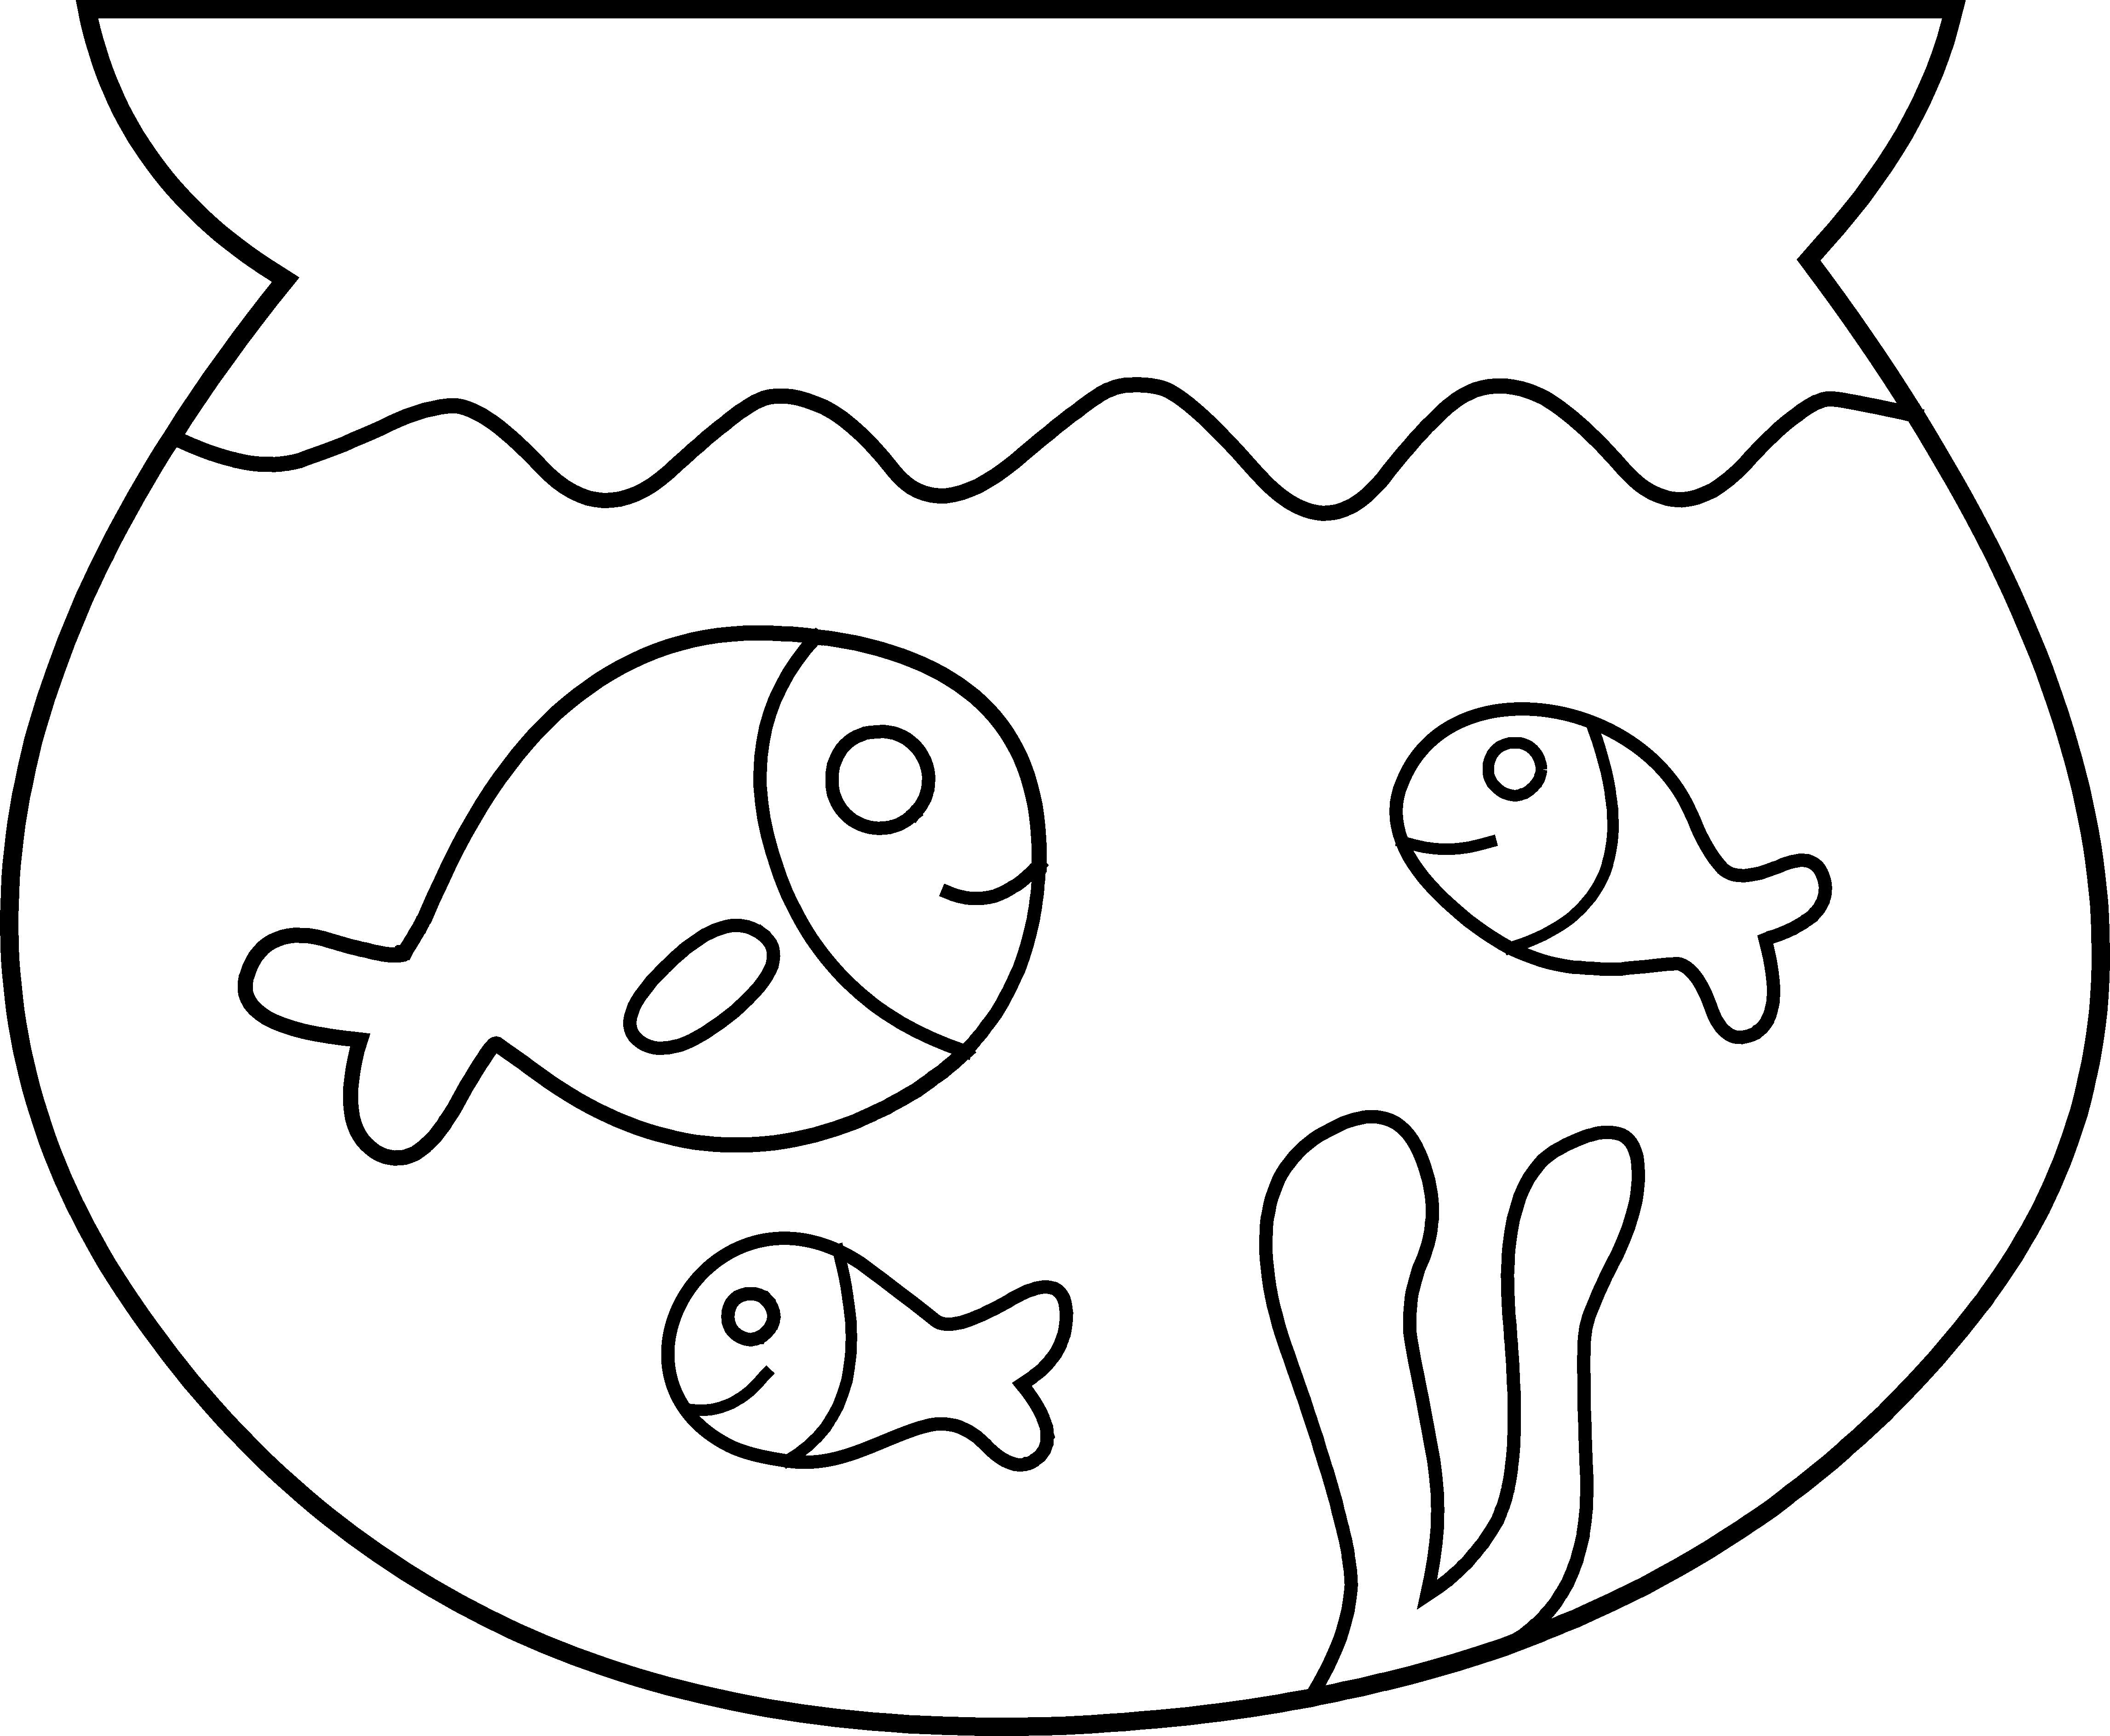 fish bowl coloring pages : Printable Coloring Sheet ~ Anbu ...